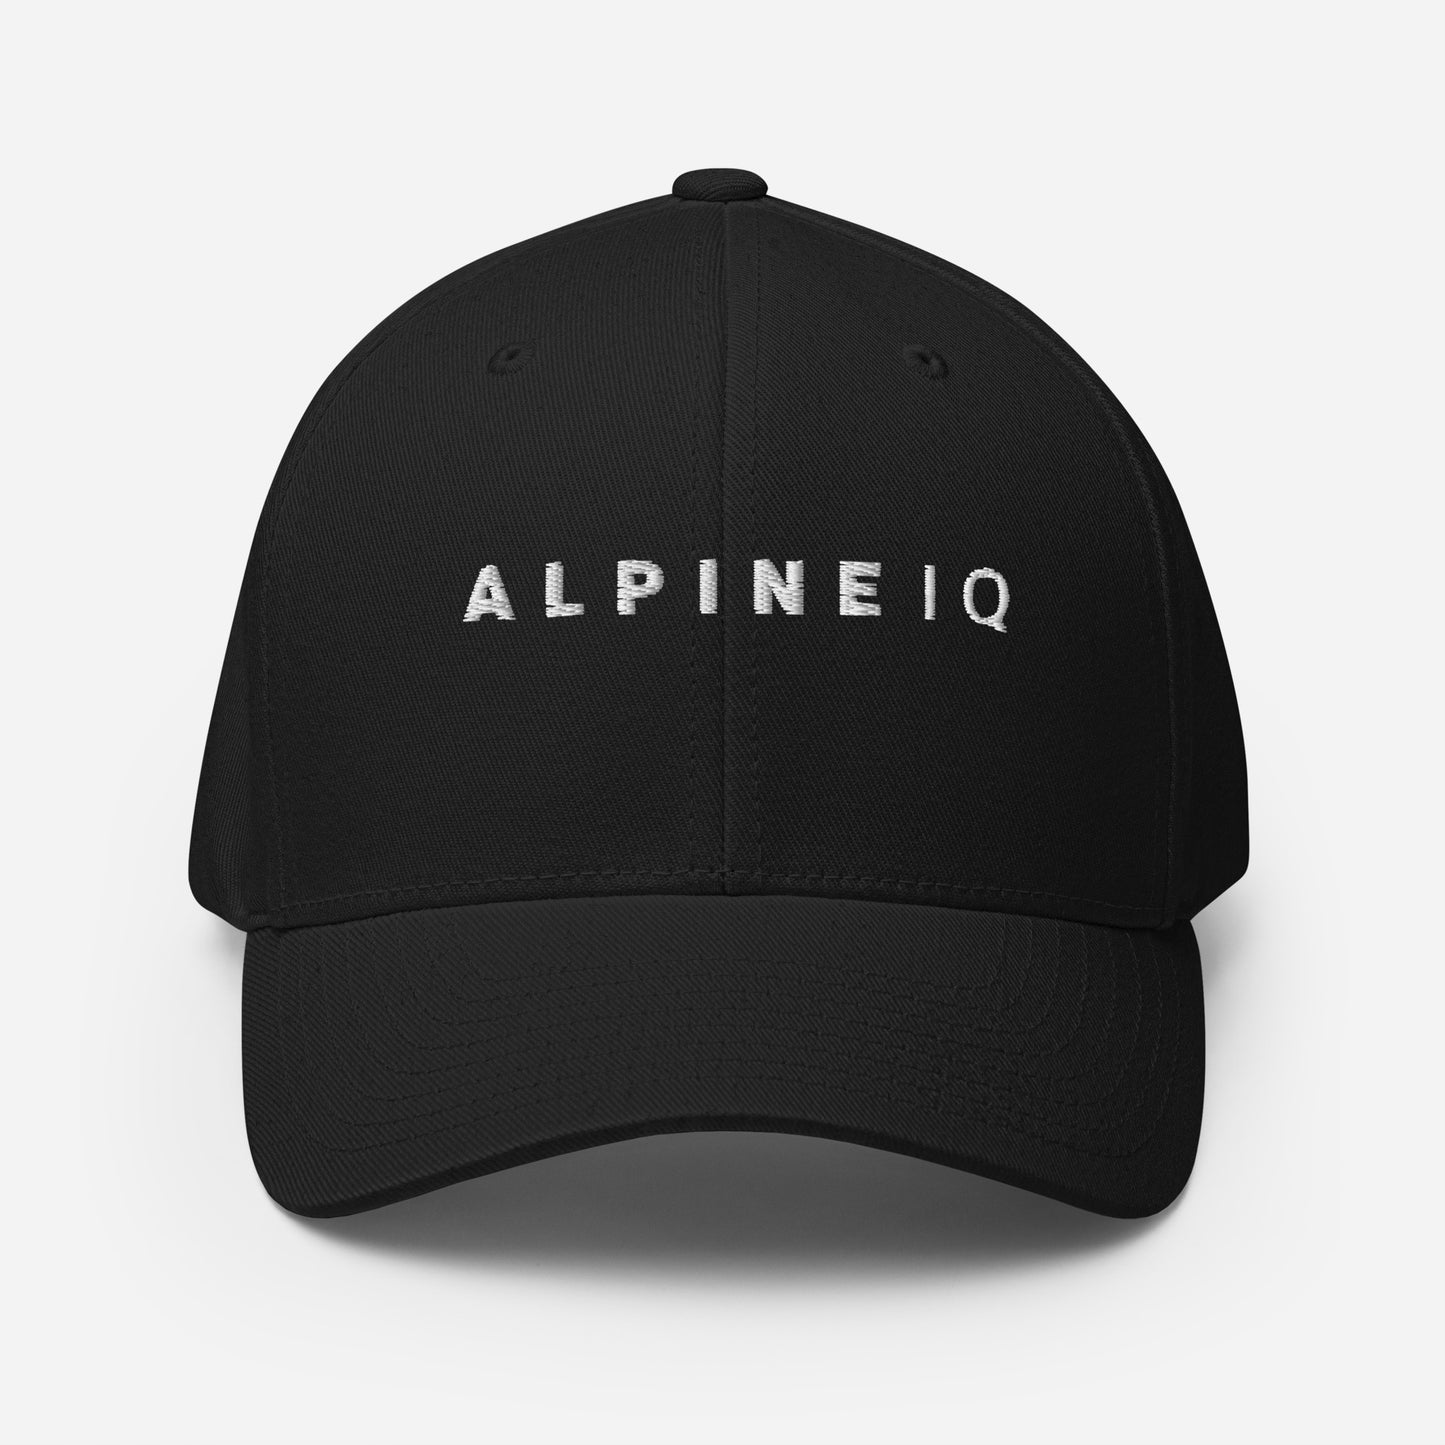 Alpine IQ Dark Cloth Baseball Caps